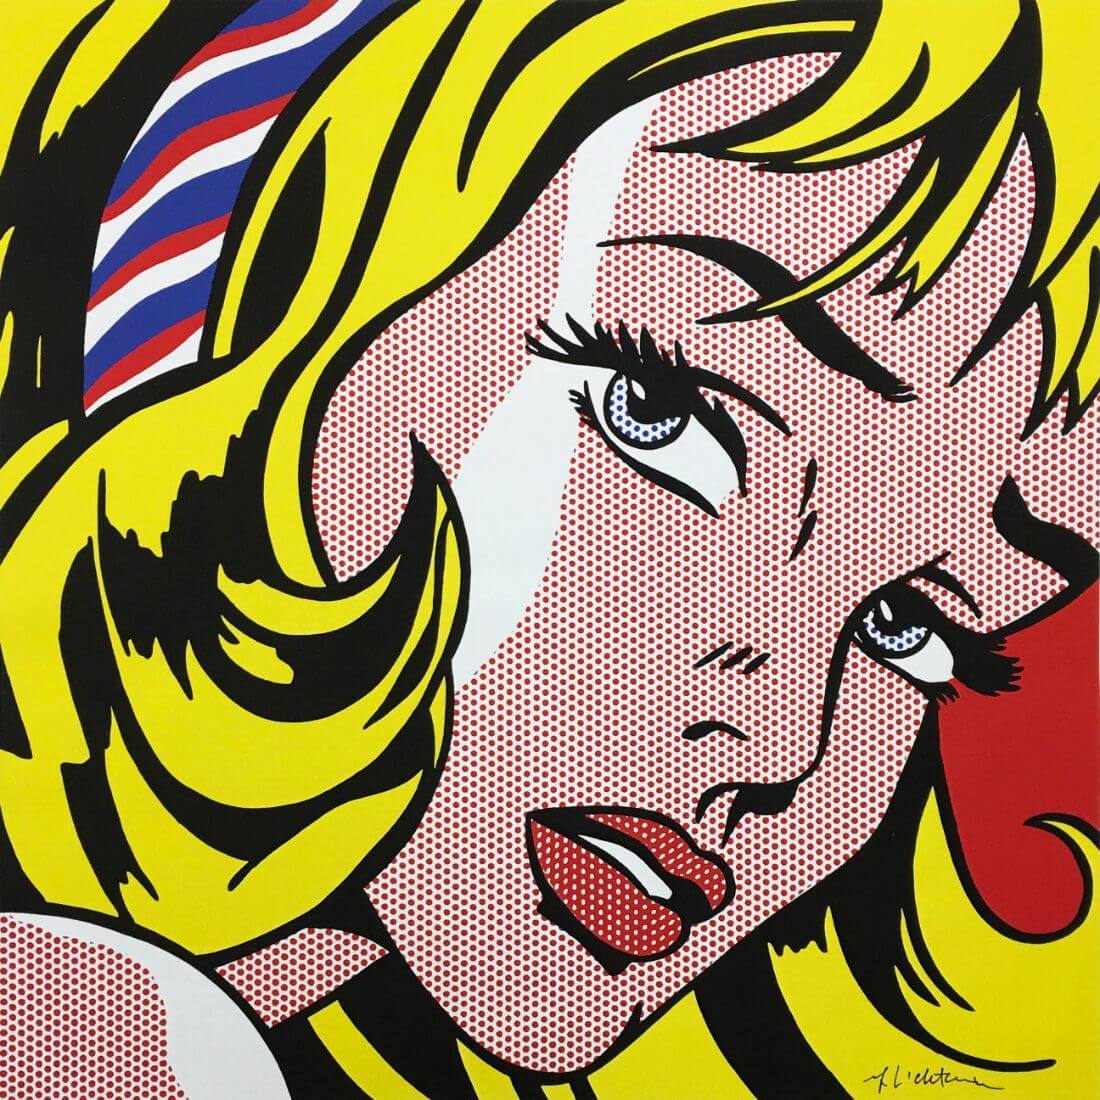 Roy Lichtenstein framed print : Girl with Hair Ribbon 30 x 30 cm